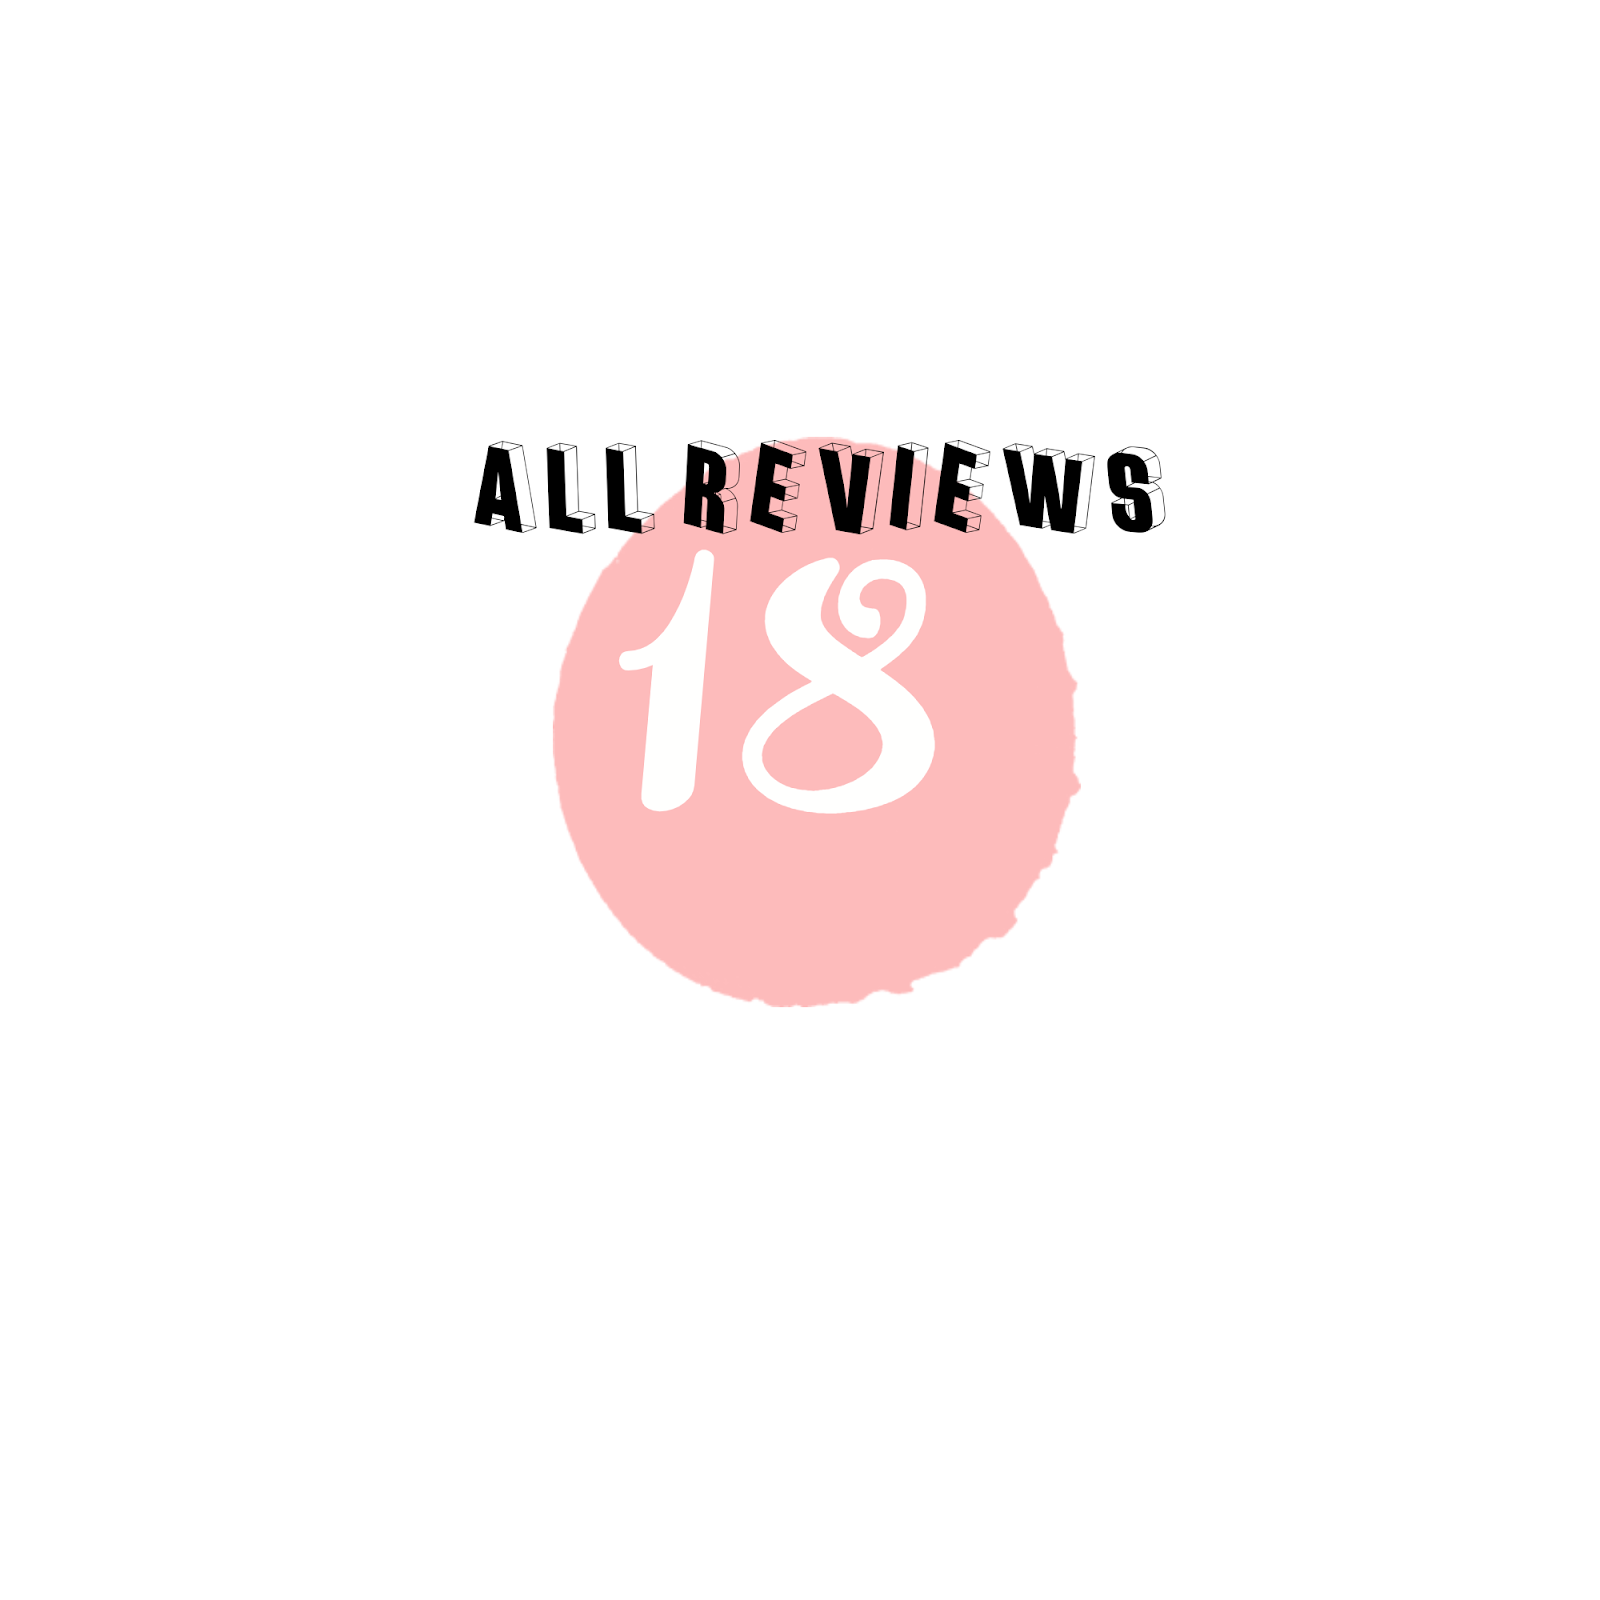 Allreviews18